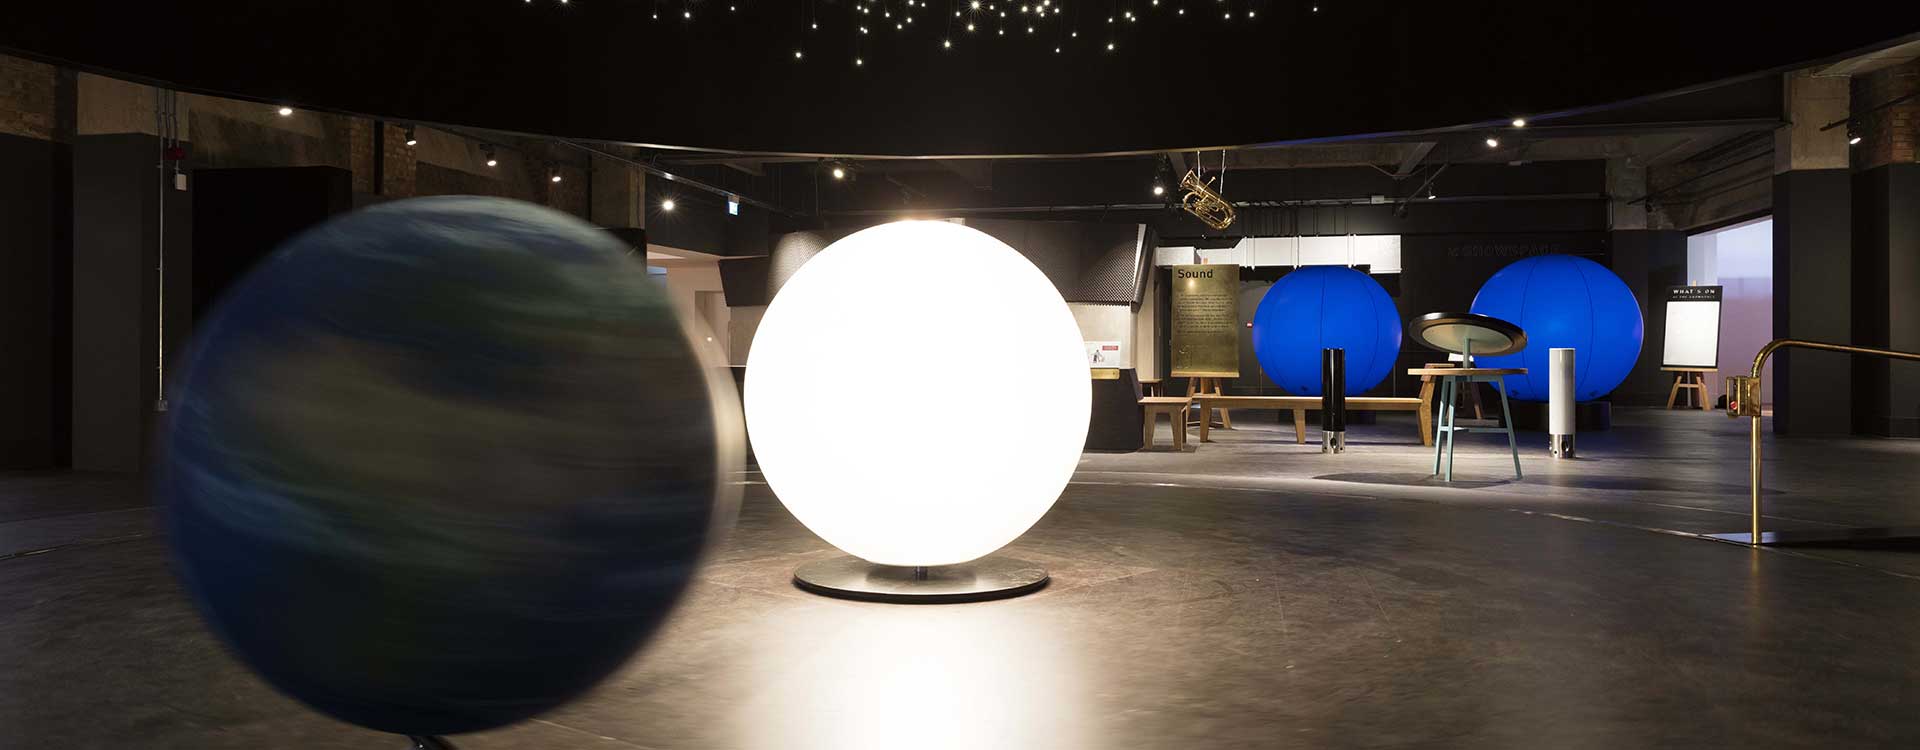 fibre optic lighting in the science museum